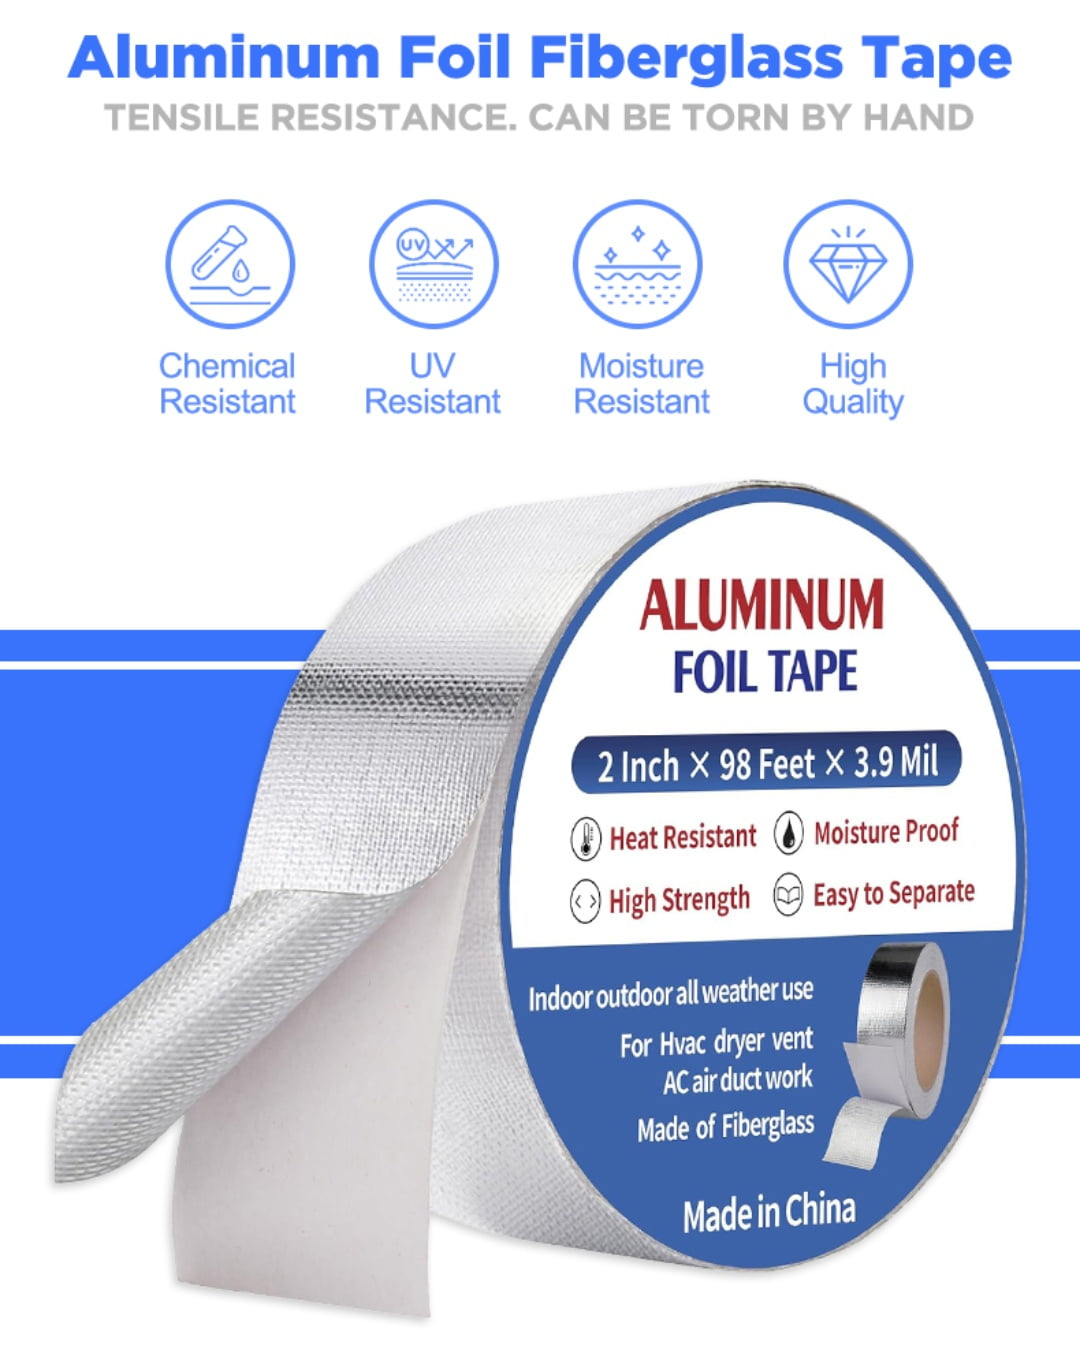 Aluminum foil coated fiberglass tape